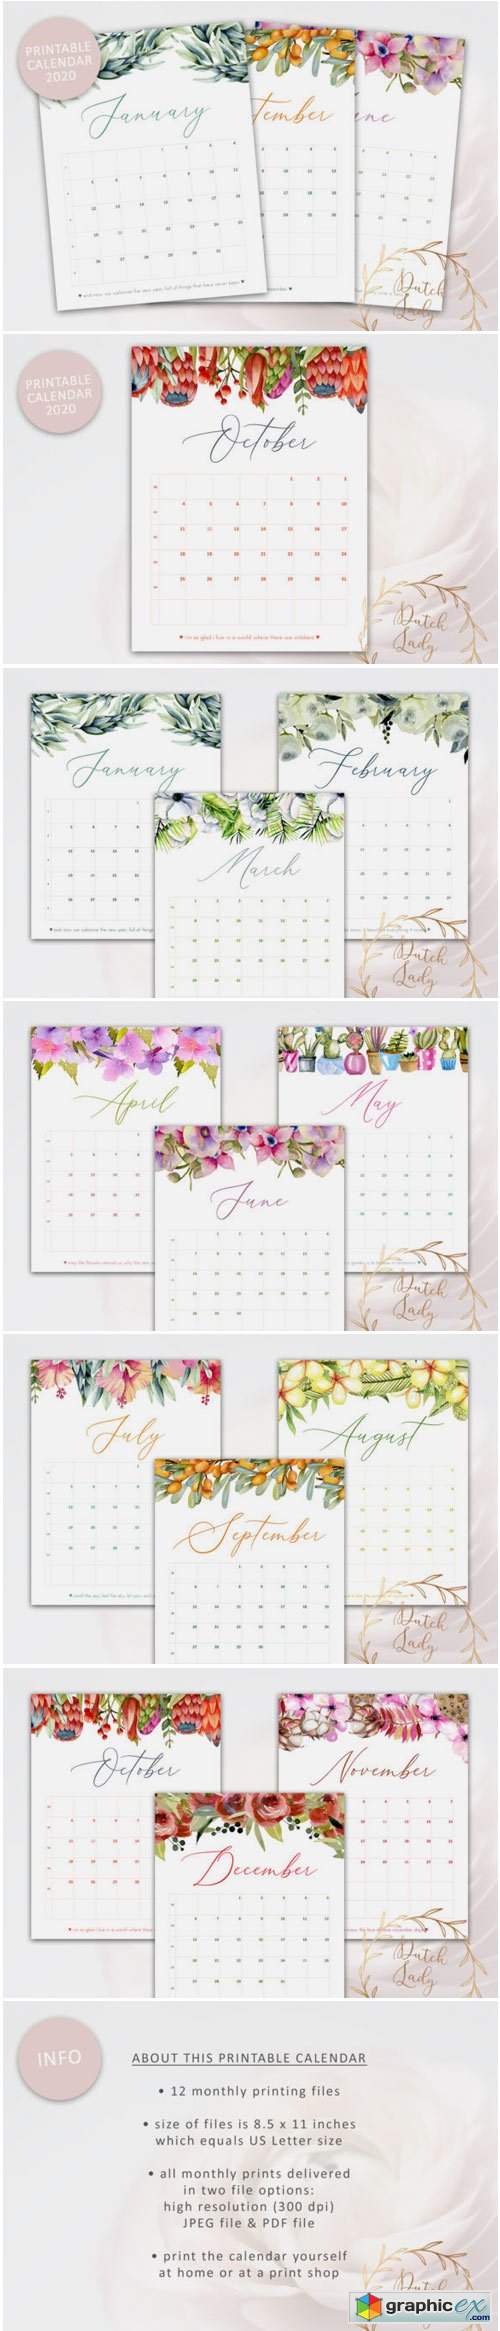 Printable Monthly Calendar 2020 Florals